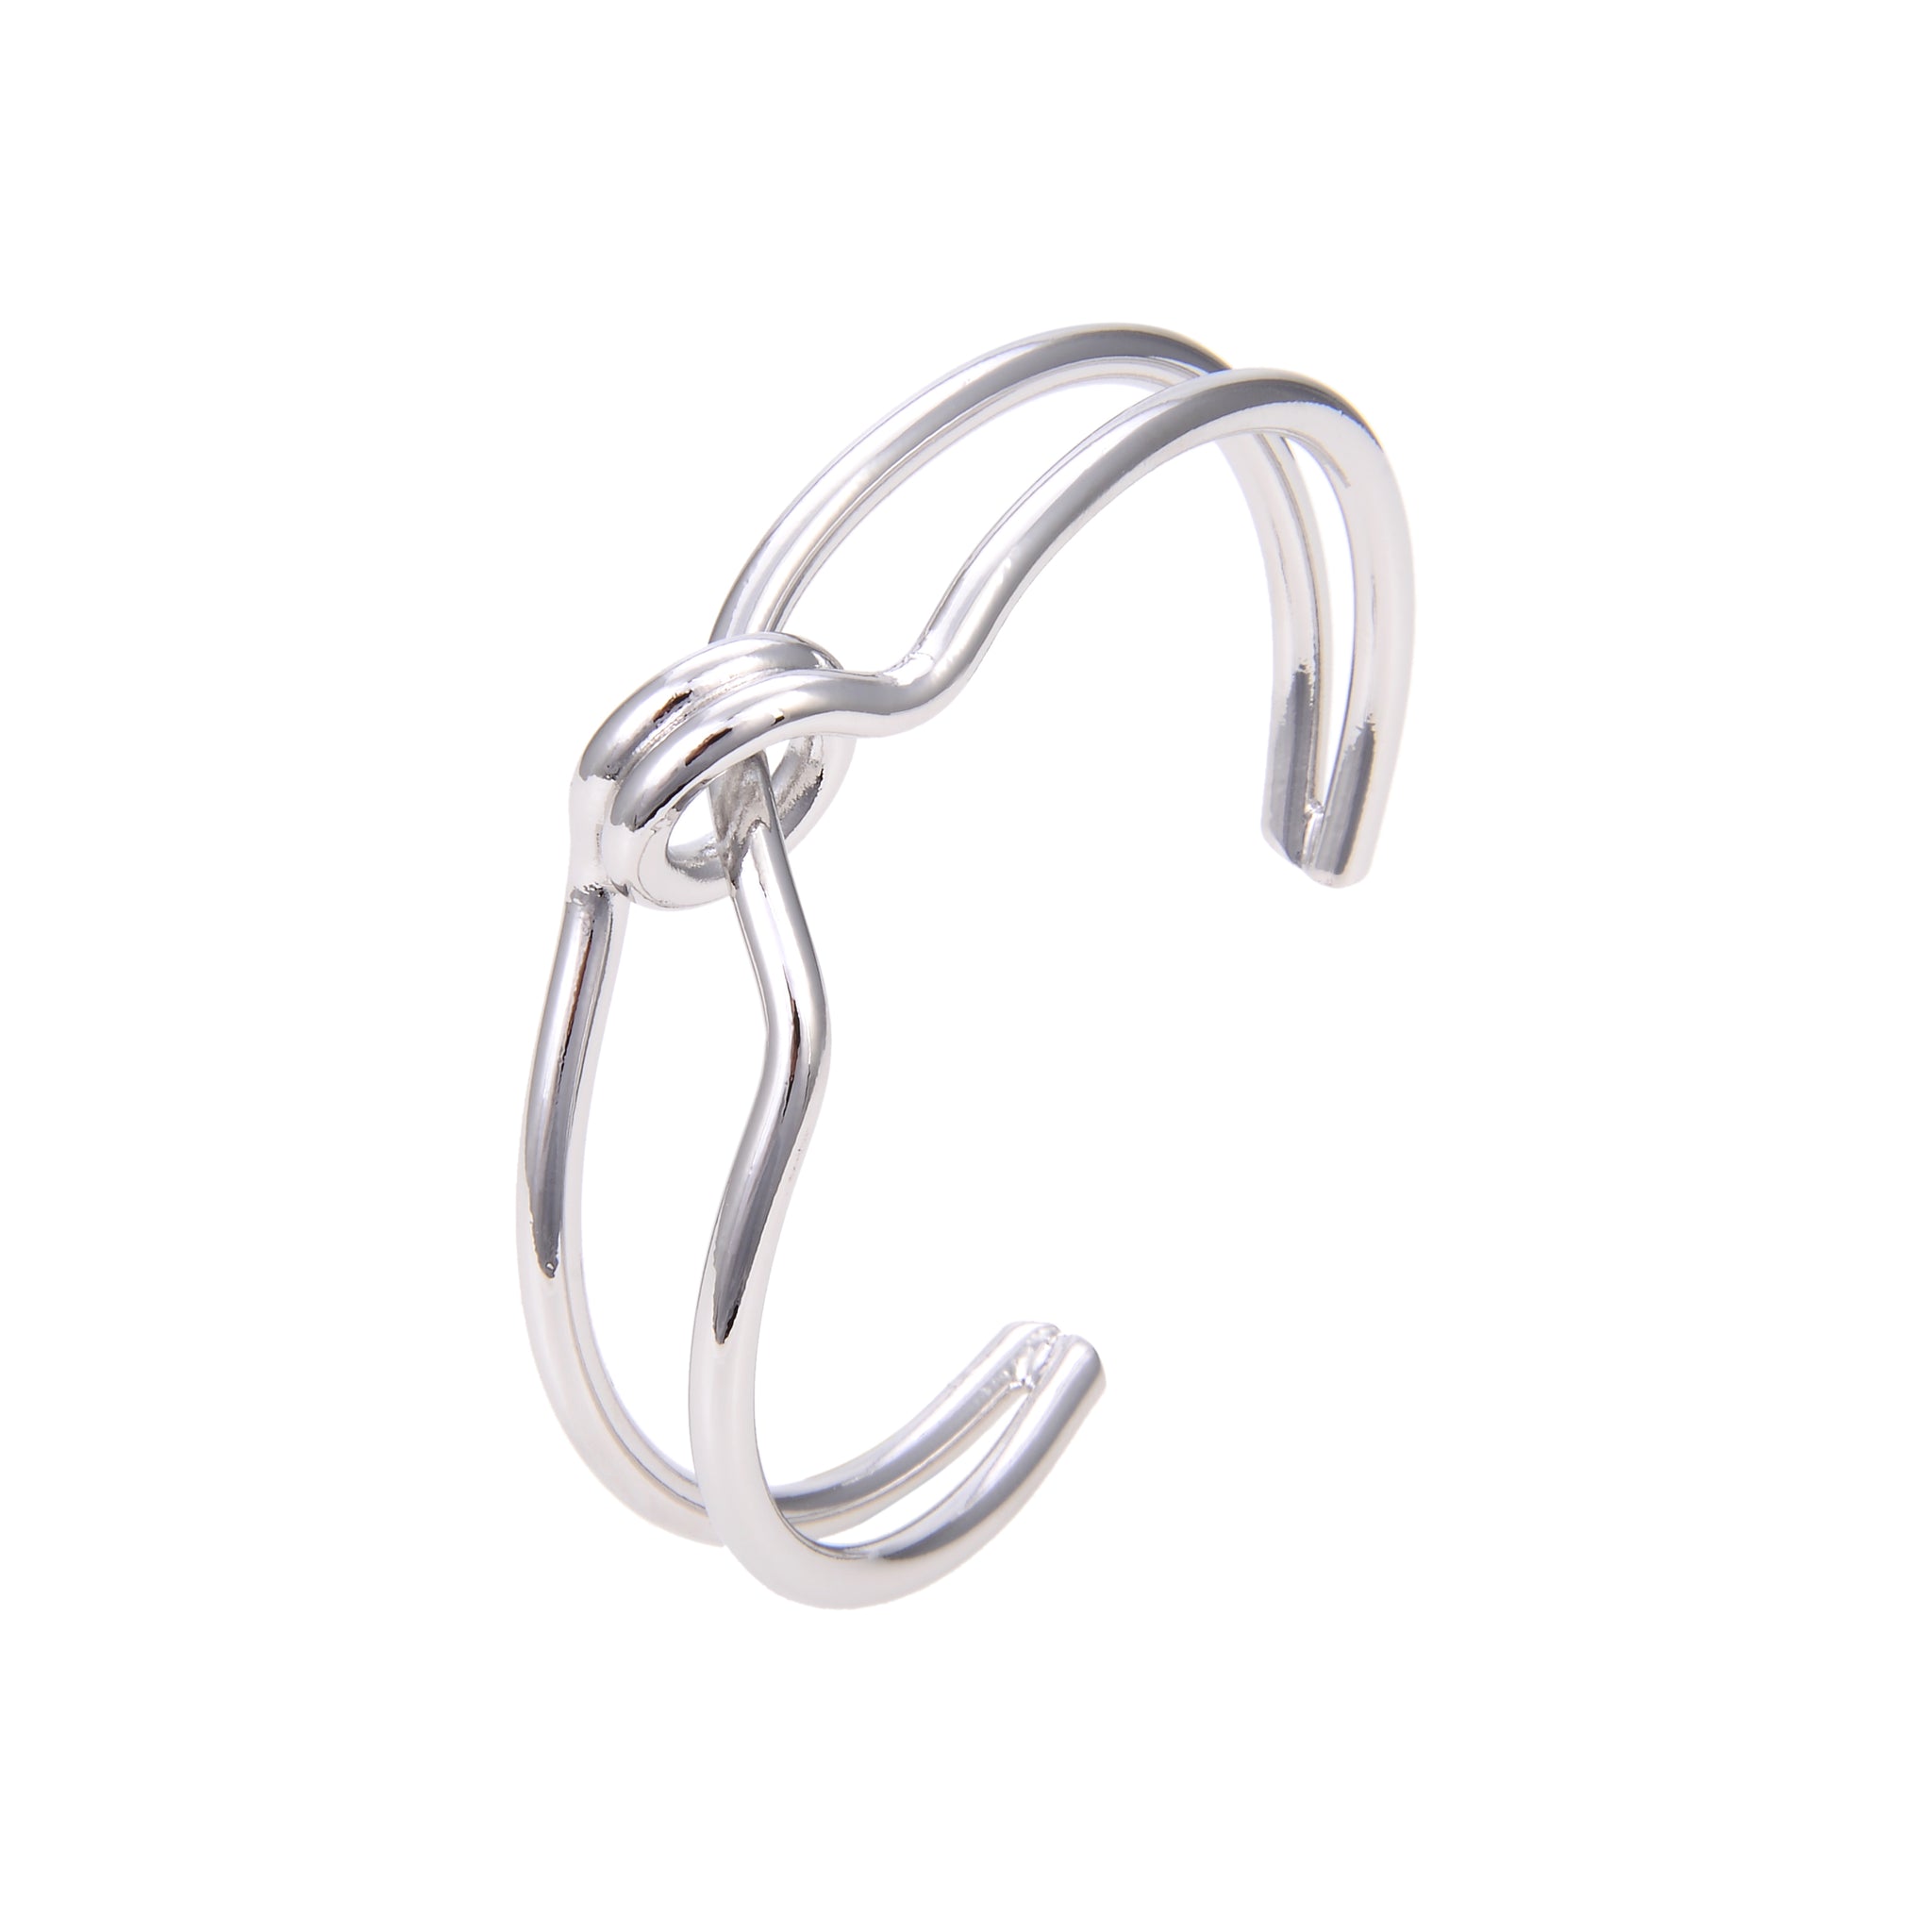 Silver Plated Bangle Bracelet, Geomatric Adjustable Silver Plated Bangle Bracelet